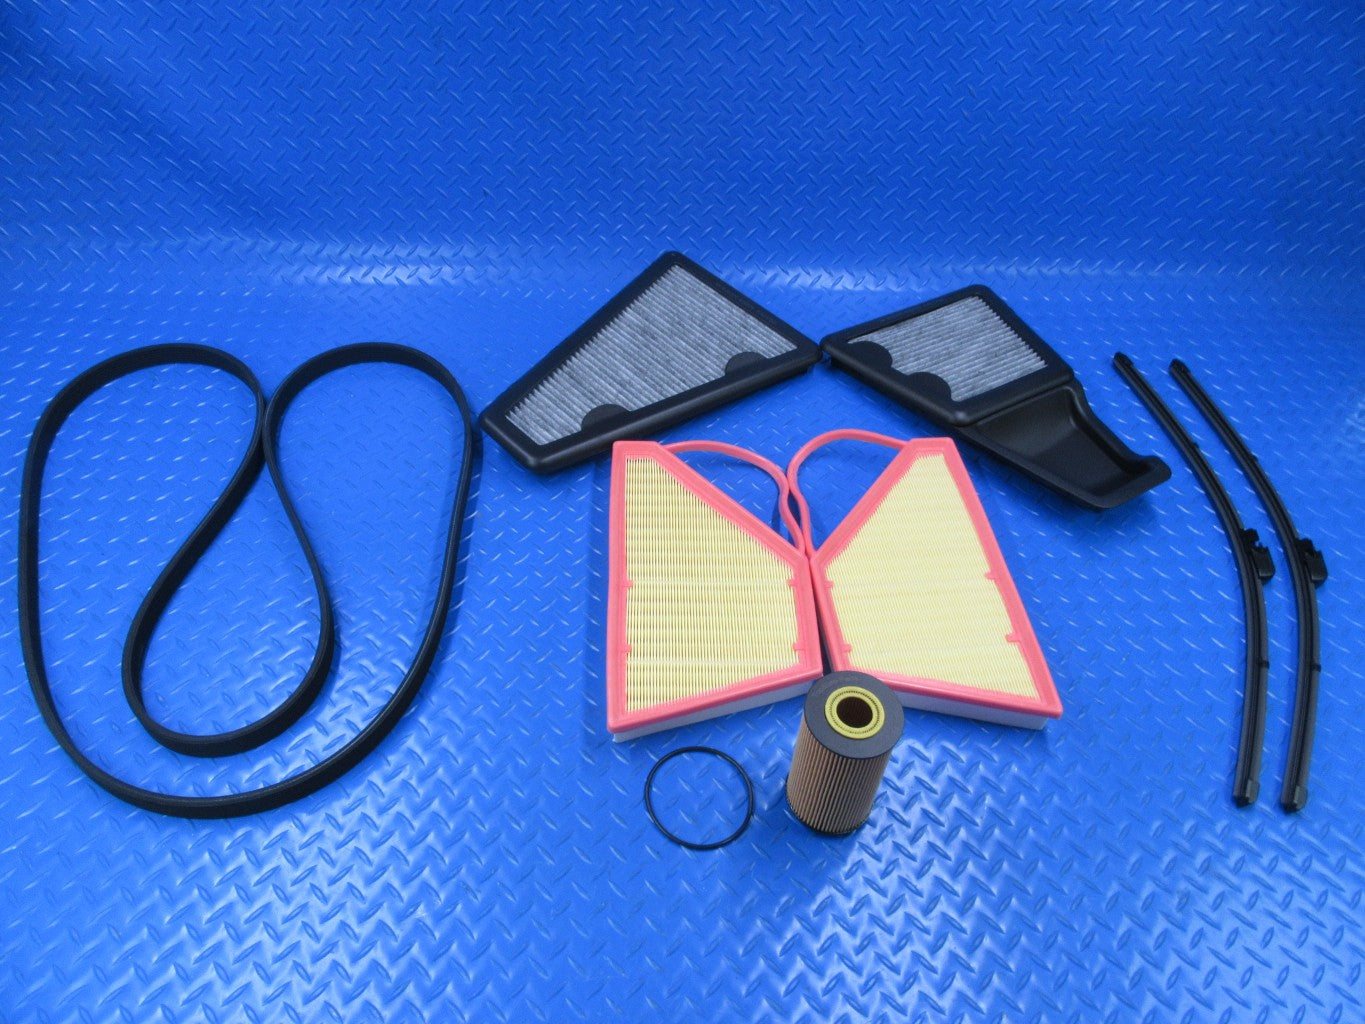 Bentley Gt Gtc Flying Spur belt filters wiper blades service kit #7387